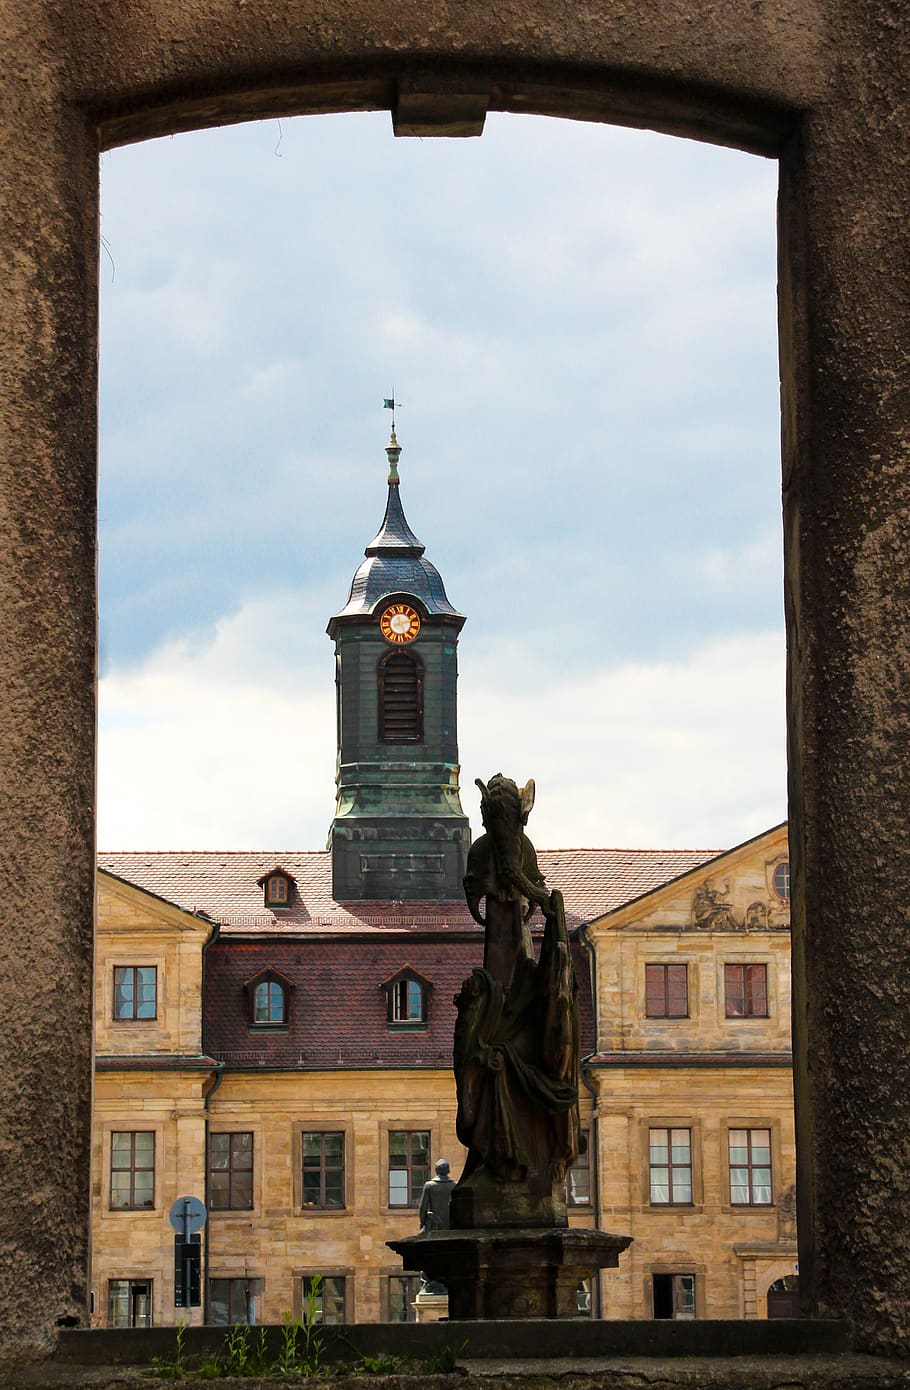 soul, window, architecture, historic center, outlook, perspective, bayreuth, built structure, sky, sculpture